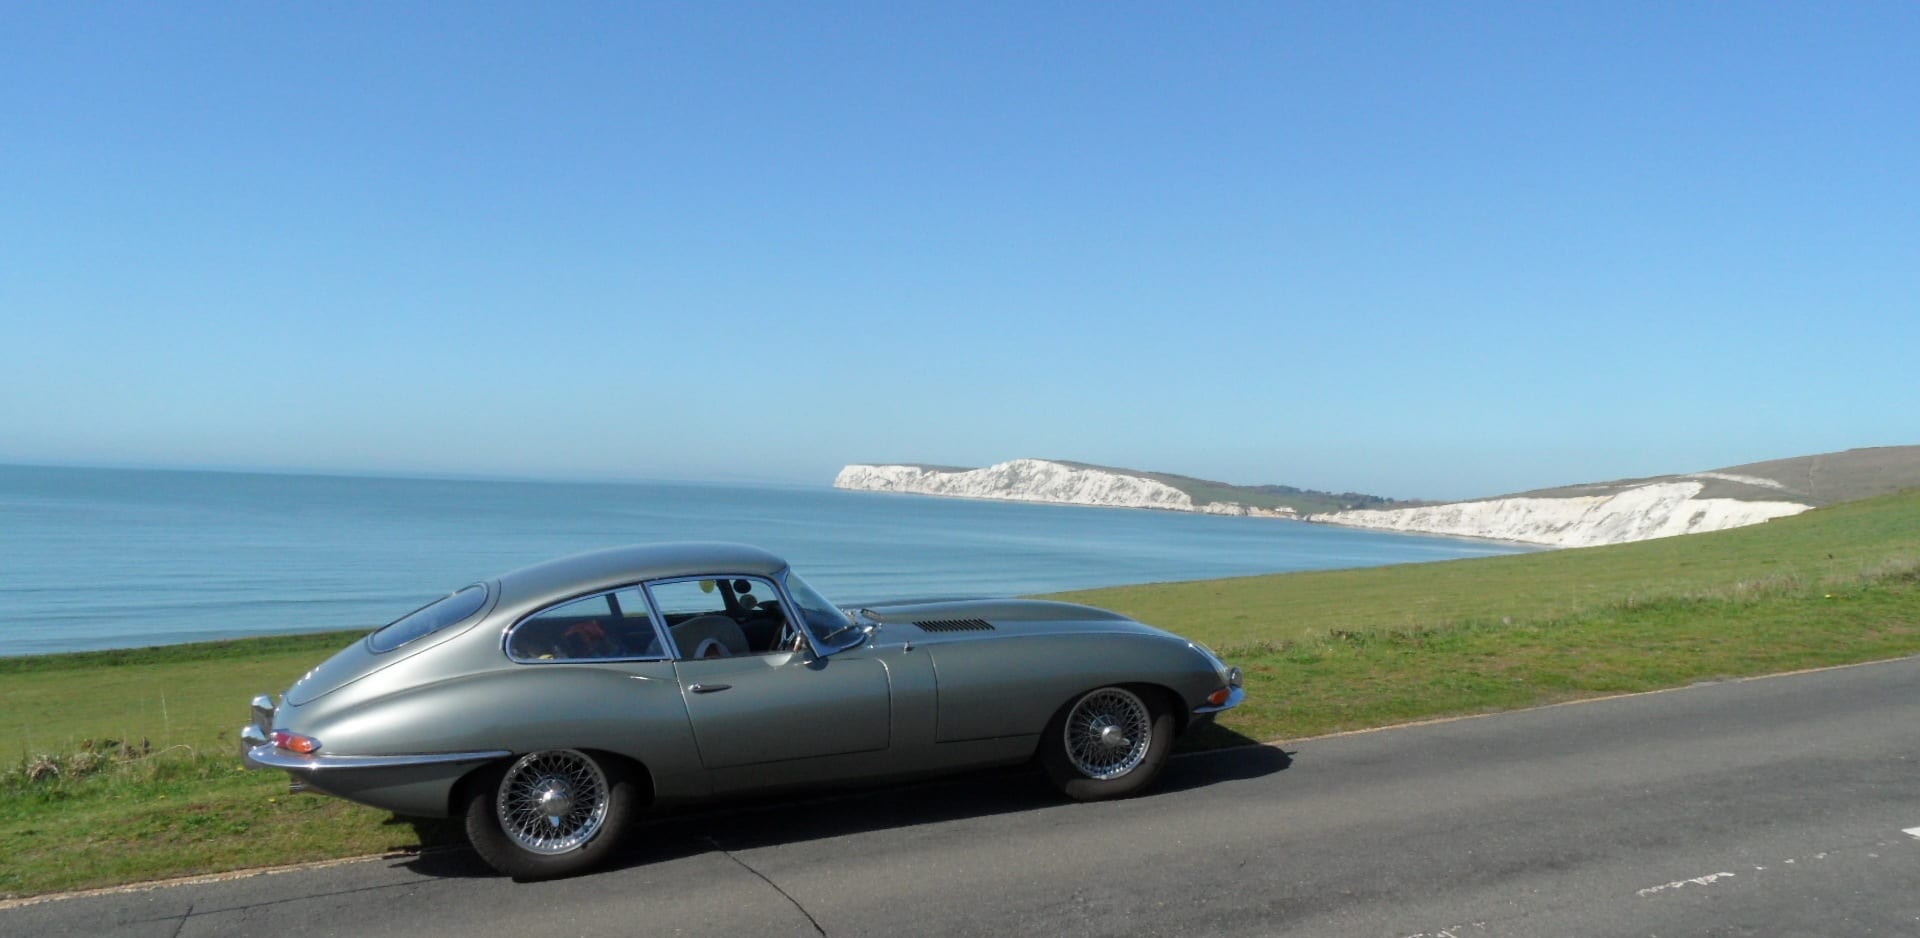 Jaguar E-type on the Military Road, Isle of Wight, UK